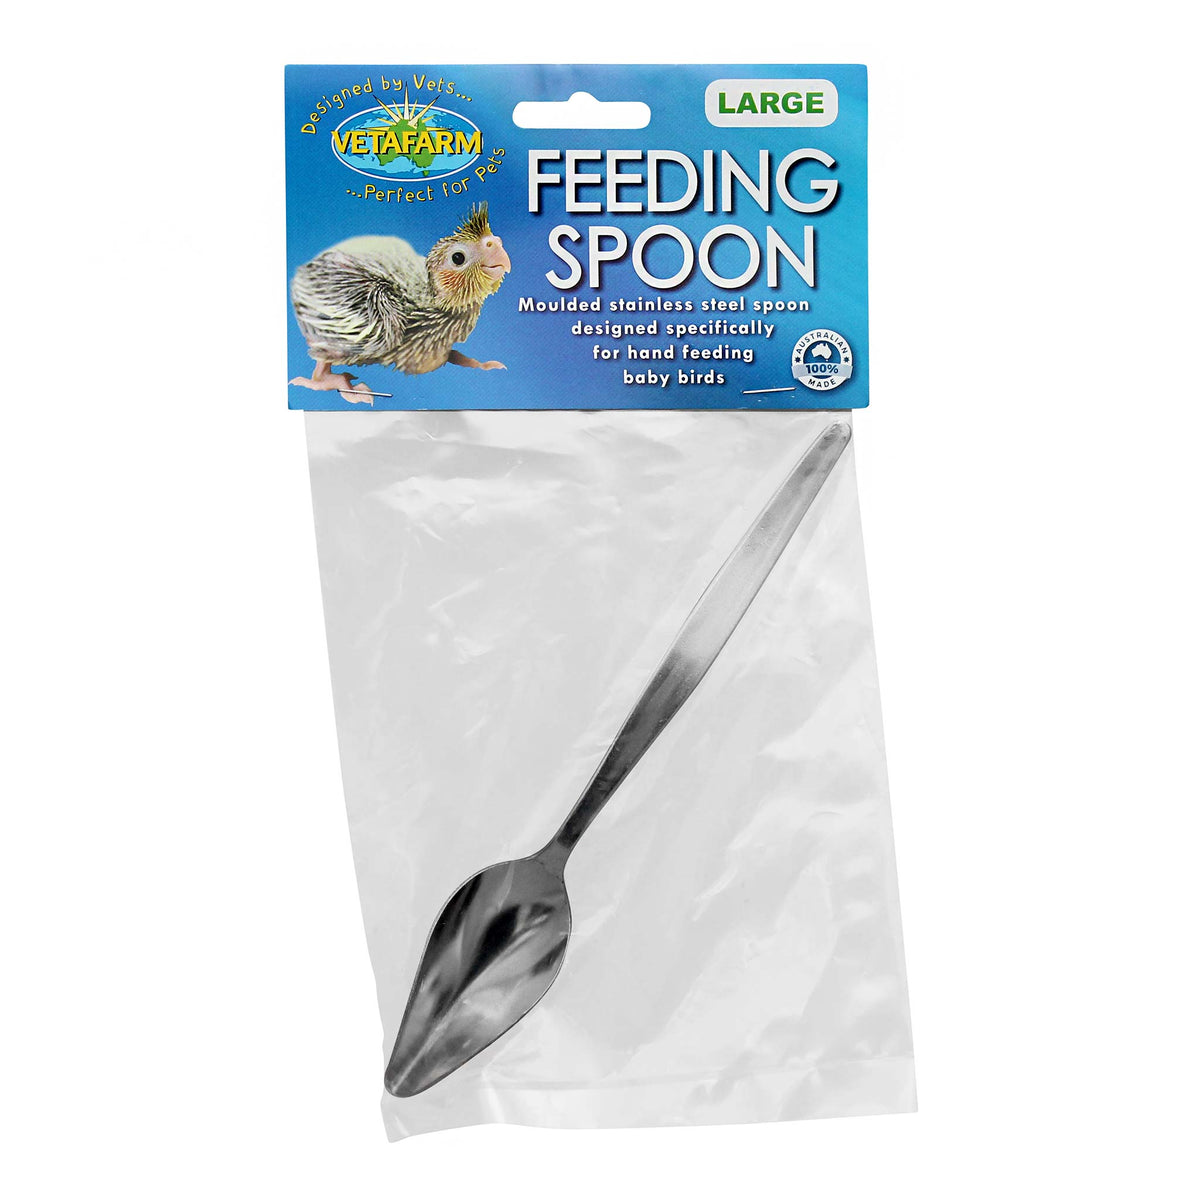 Vetafarm Feeding Spoon for Baby Birds